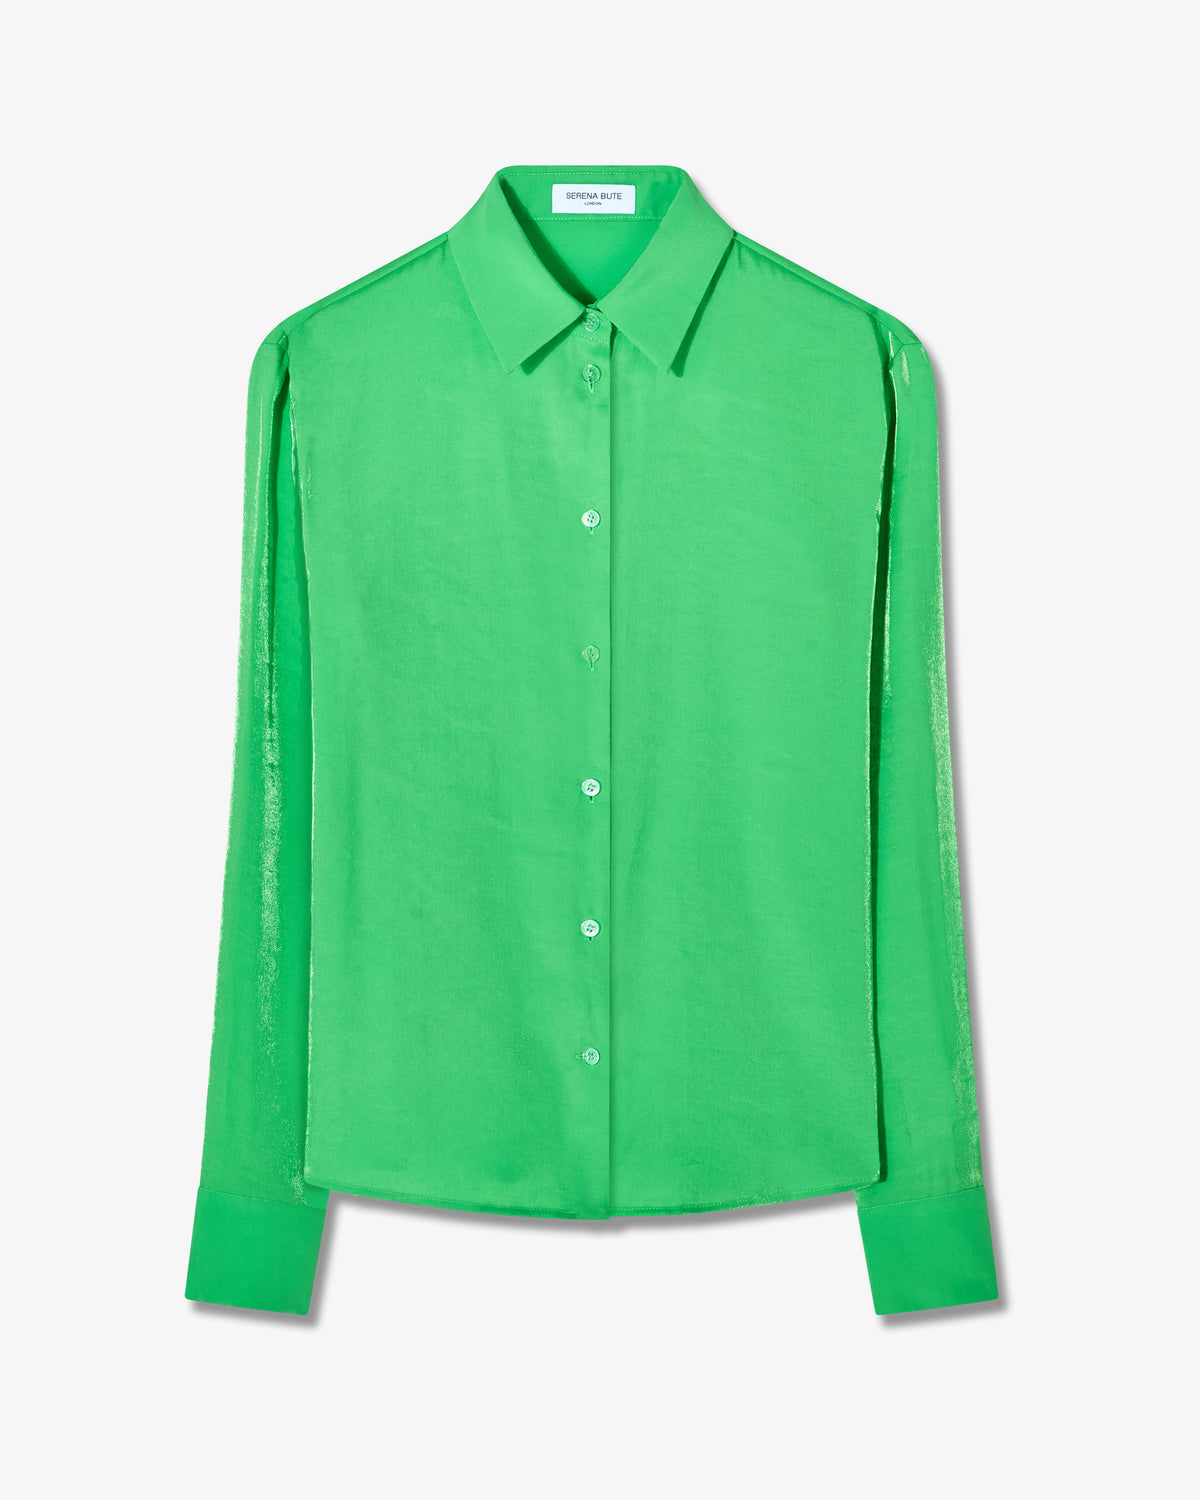 City Shirt - Bright Green